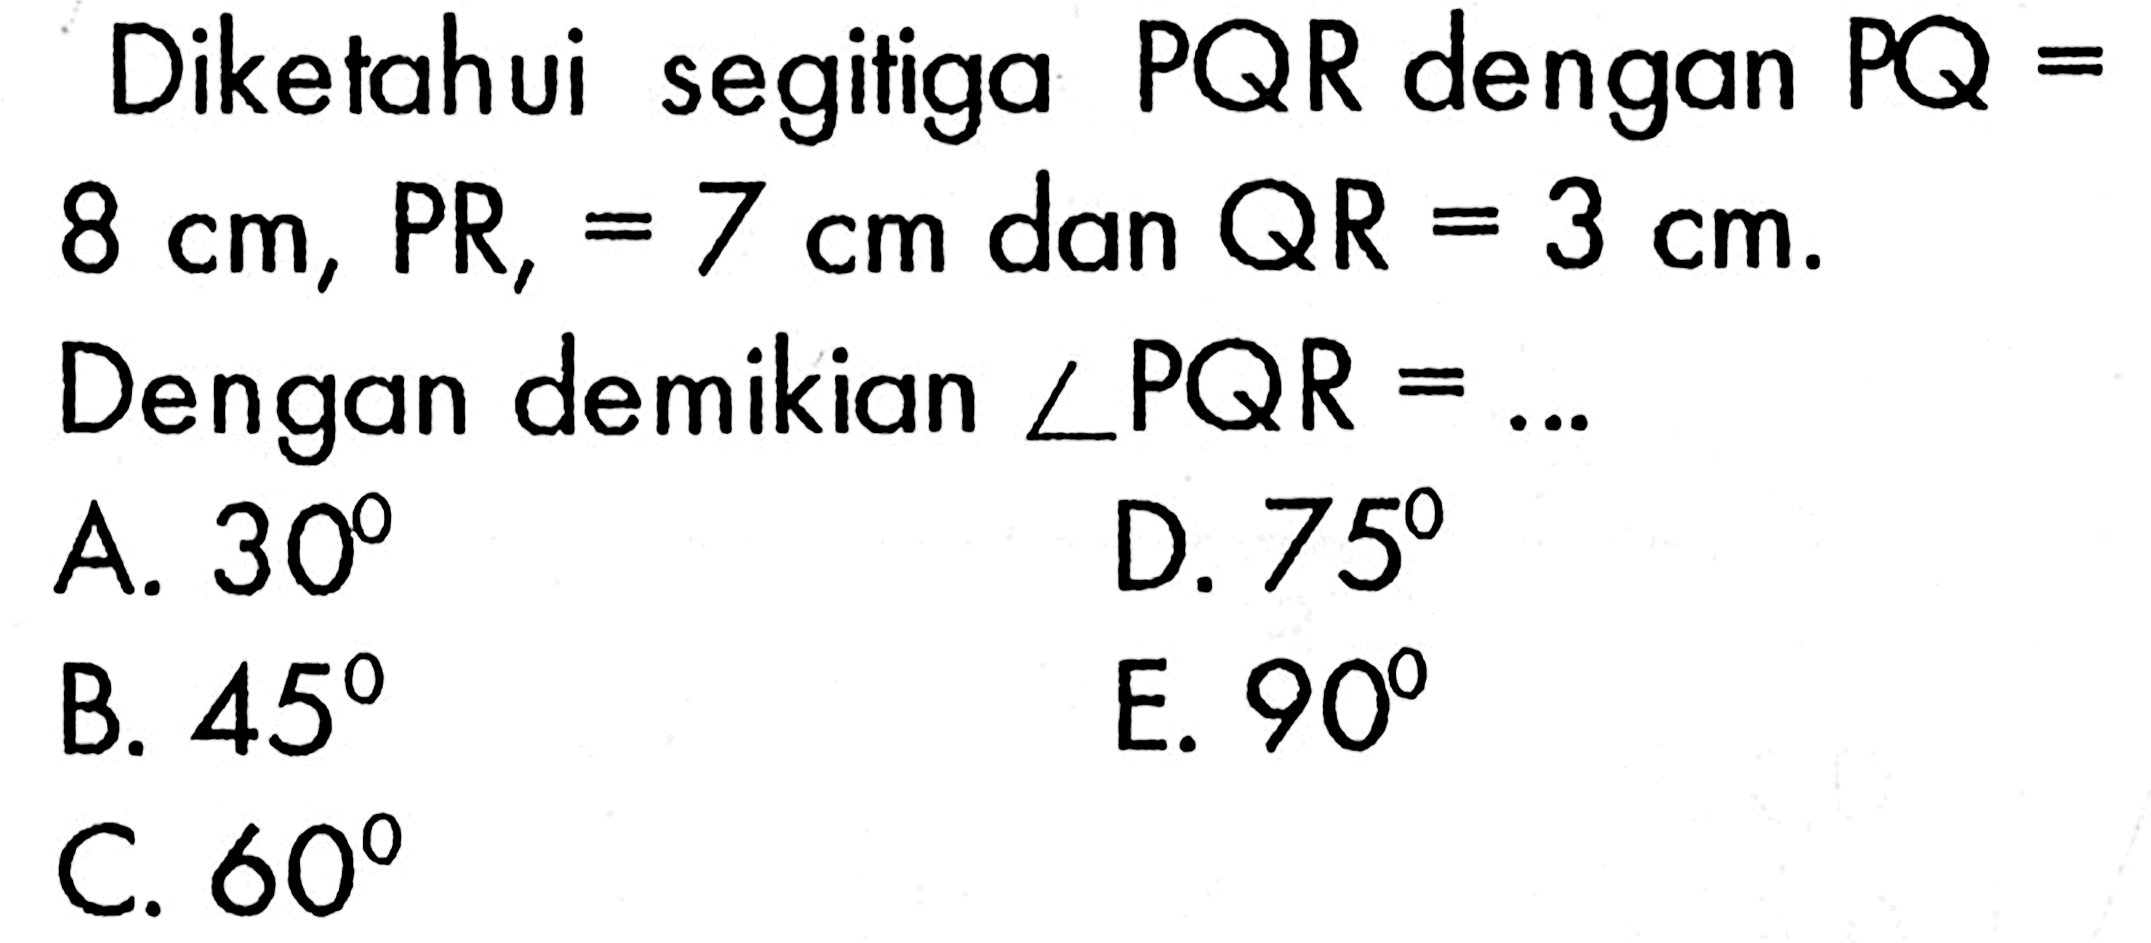 Diketahui segitiga PQR  dengan PQ=8 cm, PR=7 cm dan QR=3 cm Dengan demikian sudut PQR=.... 